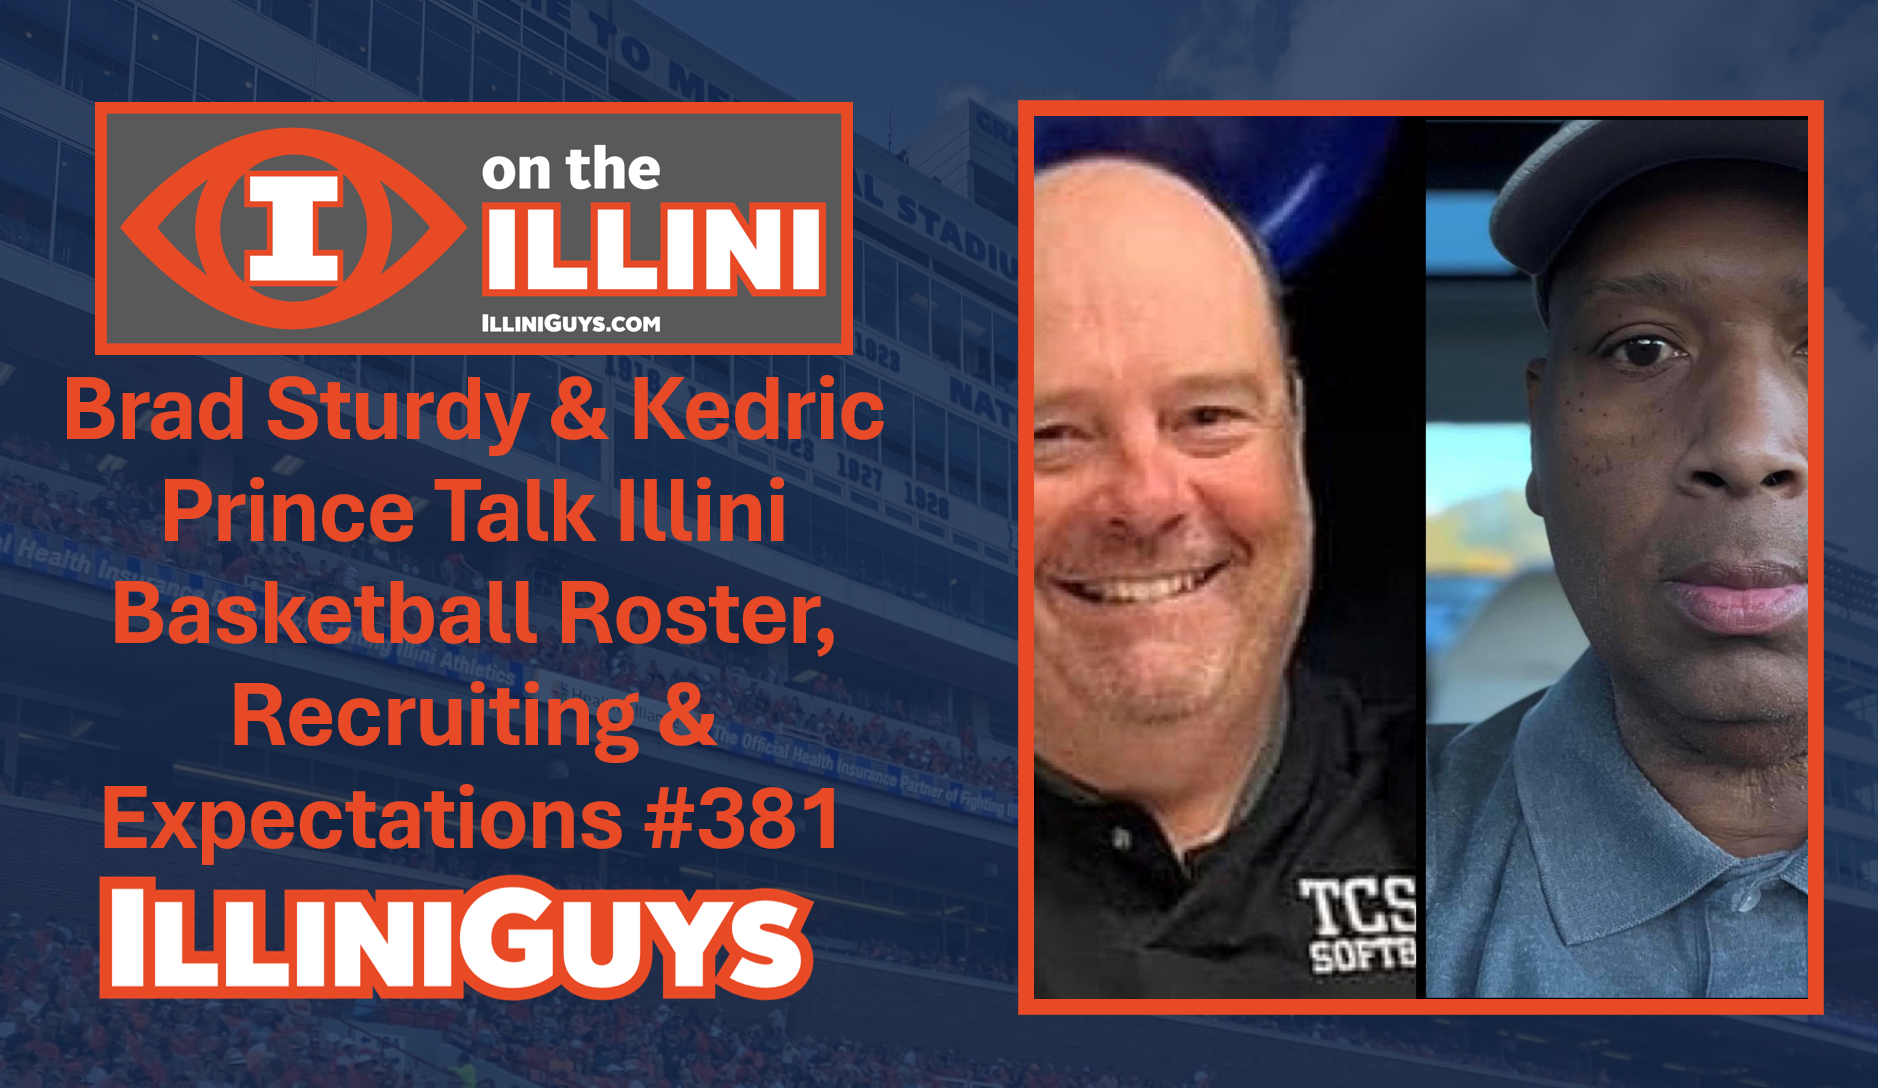 Brad Sturdy & Kedric Prince Talk Illini Basketball Roster, Recruiting & Expectations #381 - YouTube Edition